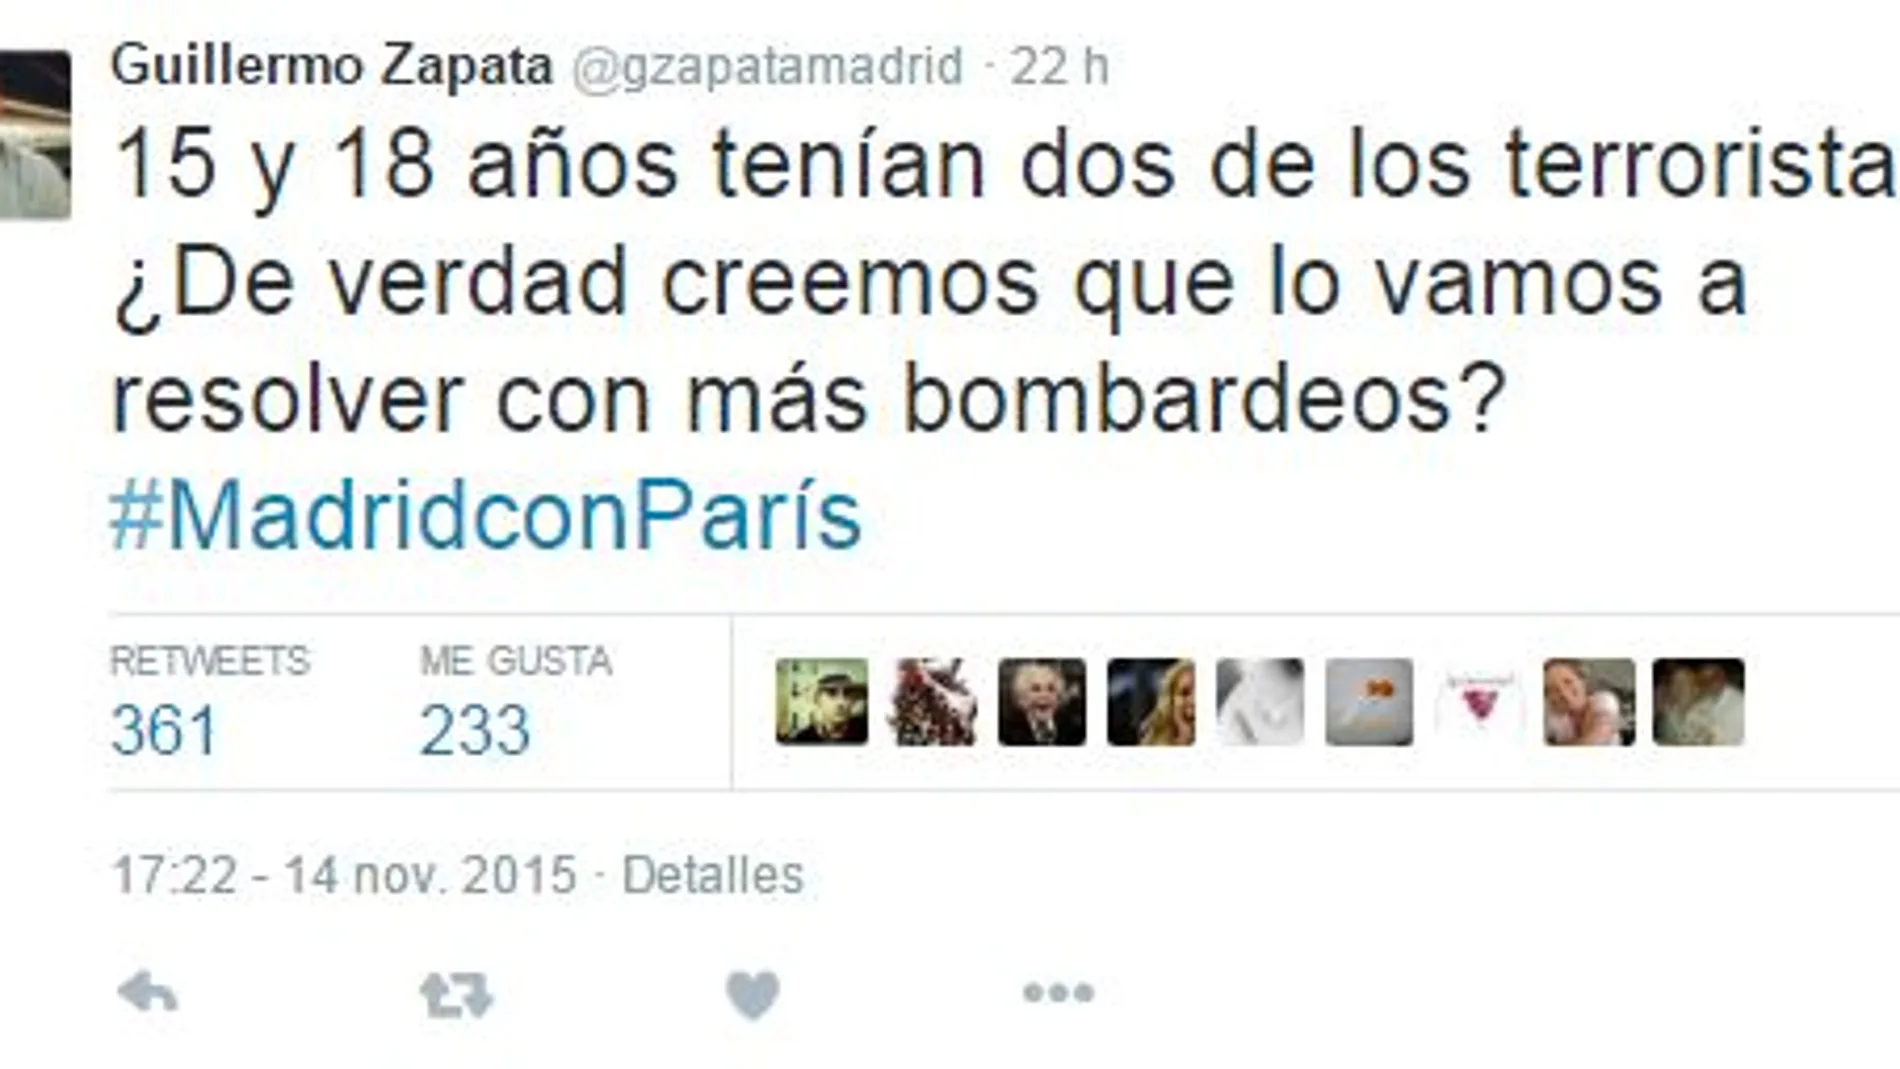 Guillermo Zapata la vuelve a liar en Twitter criticando los bombardeos en Siria e Irak